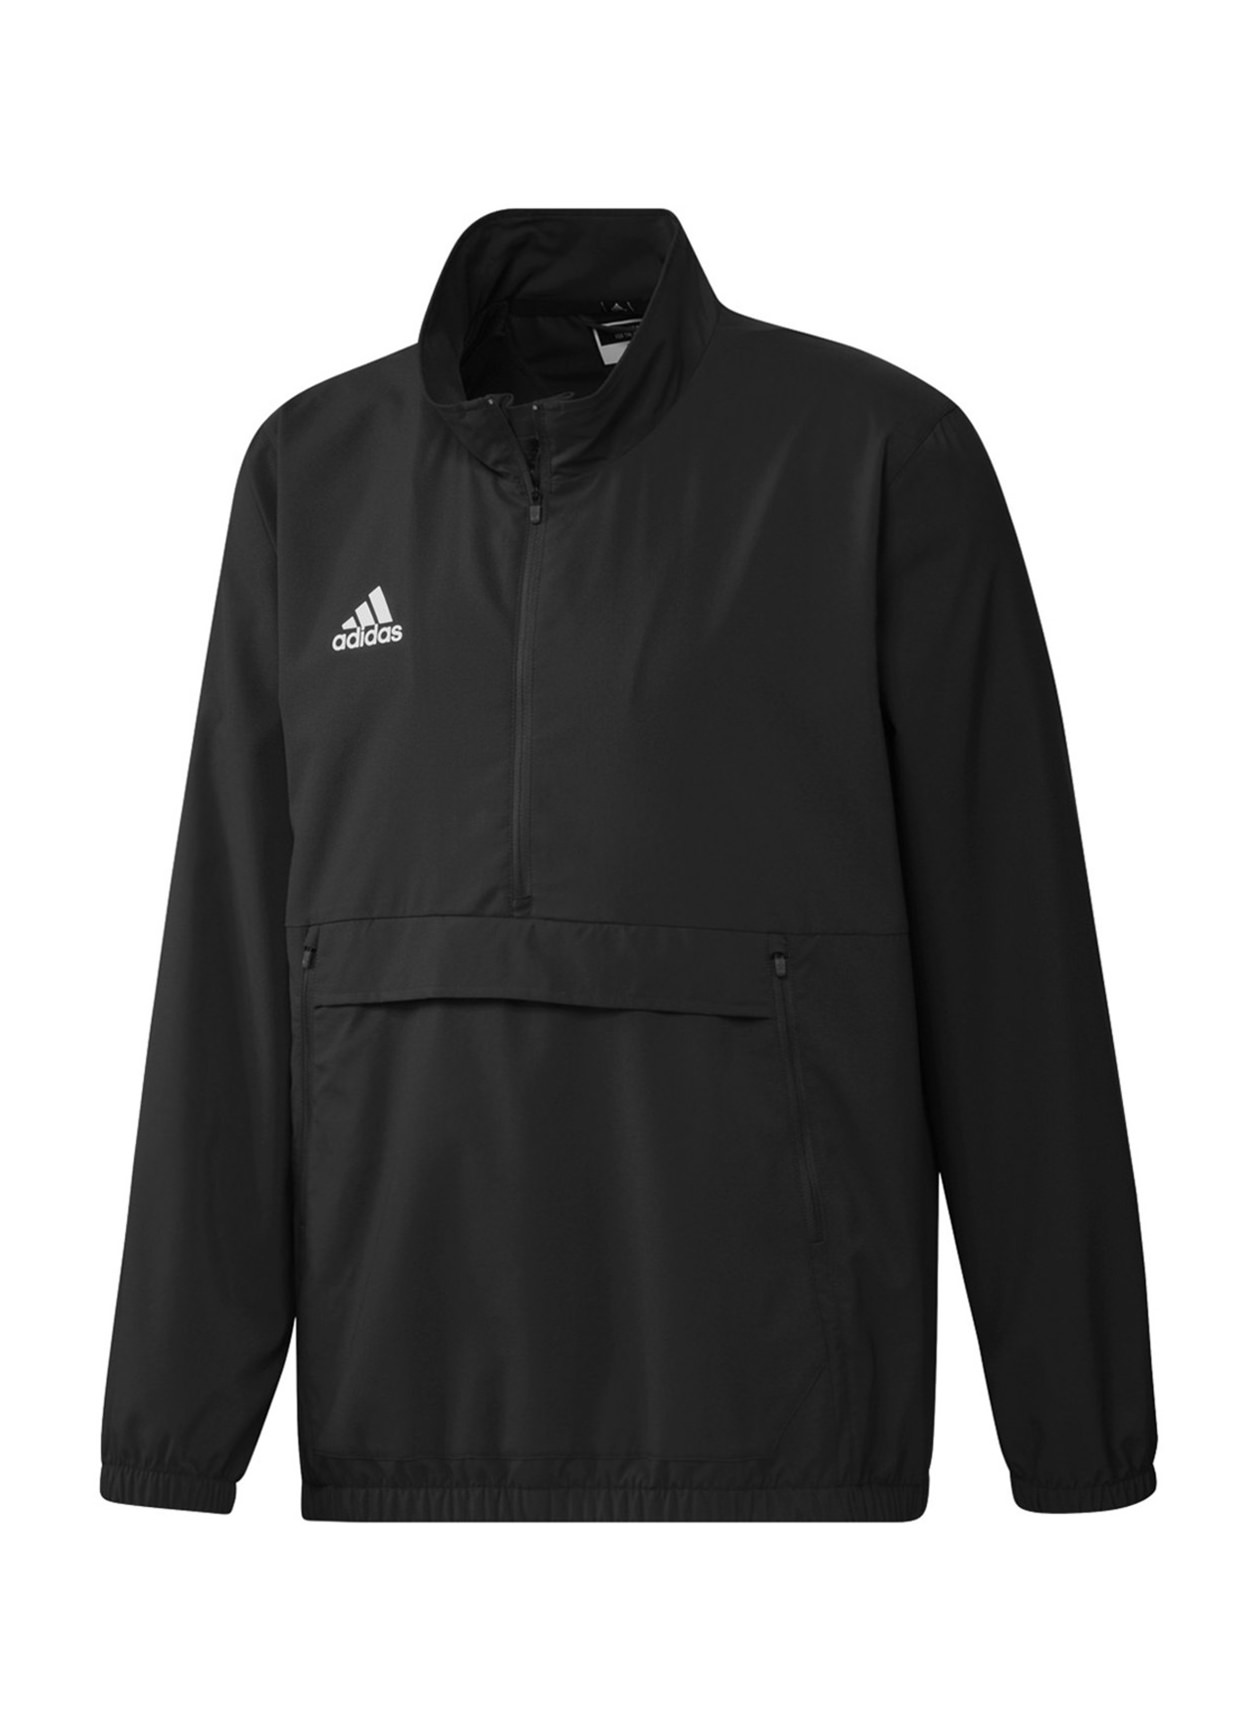 Adidas Men's Black / White Stadium Quarter-Zip Jacket